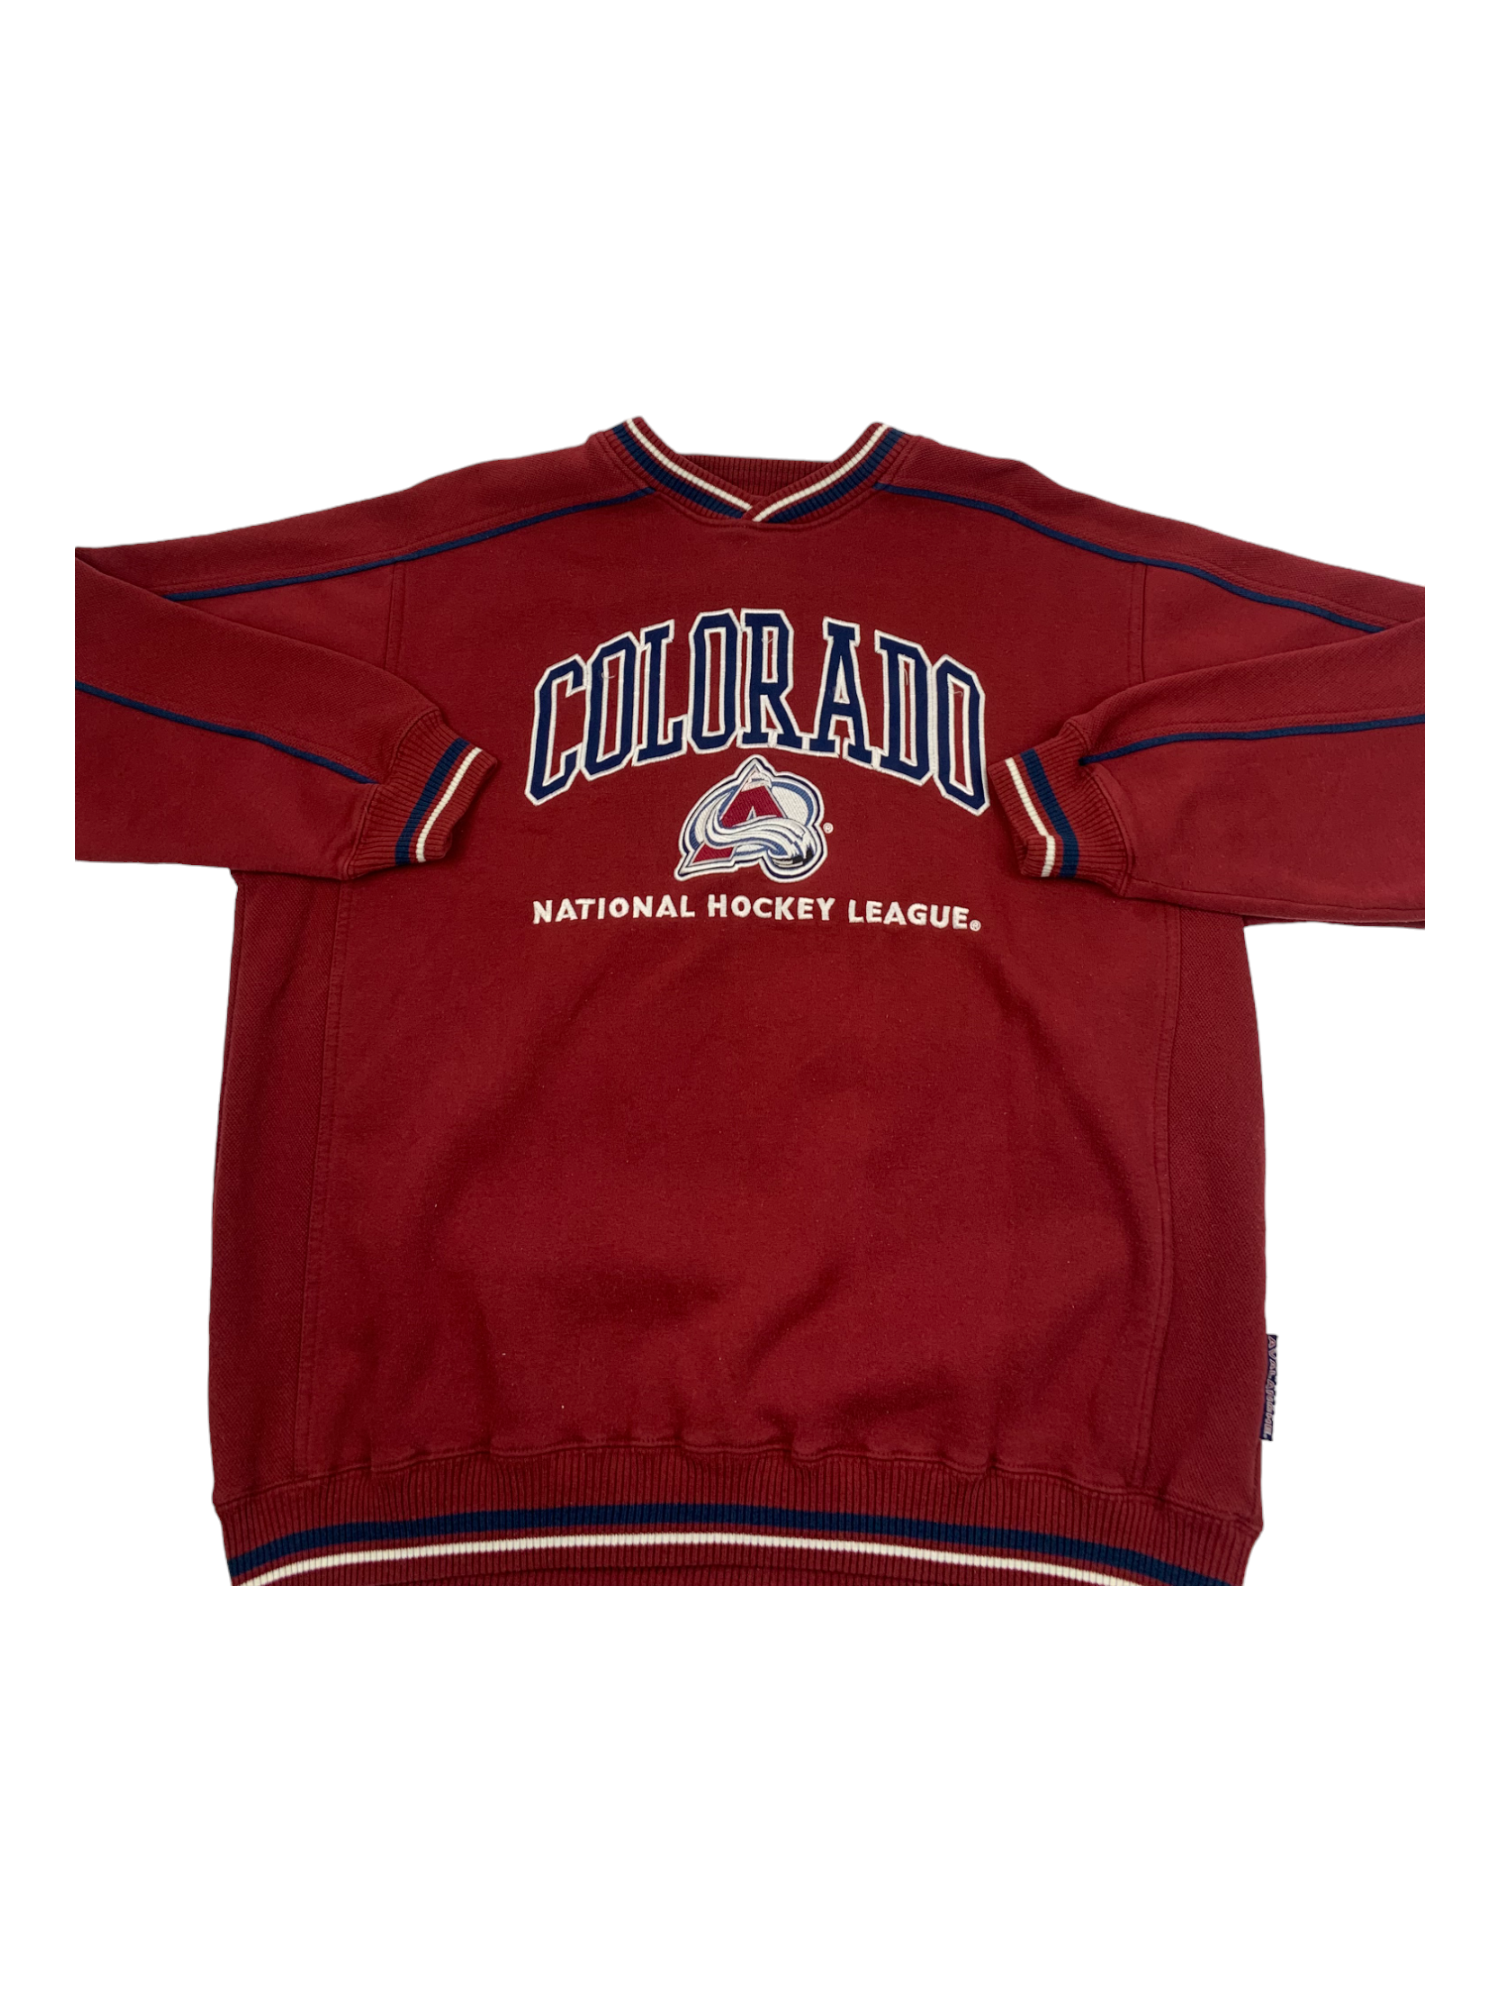 Vintage Lee Sports Colorado Avalanche Hockey Shirt